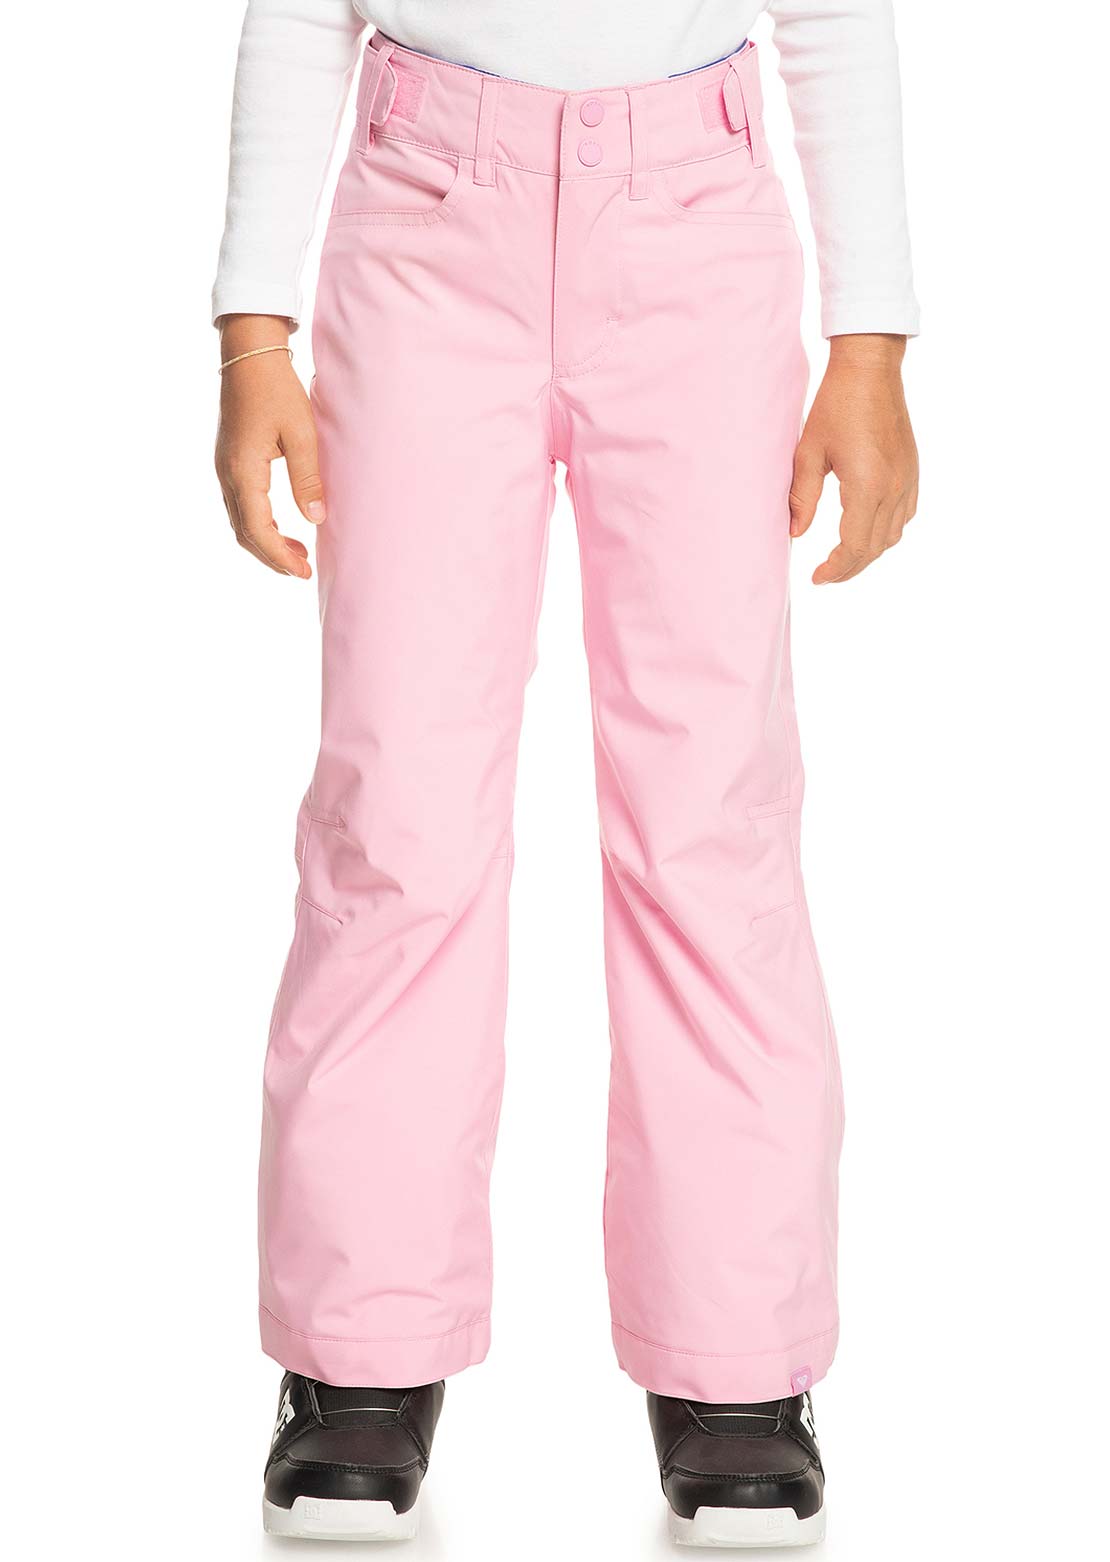 Roxy Junior Backyard Pants Pink Frosting